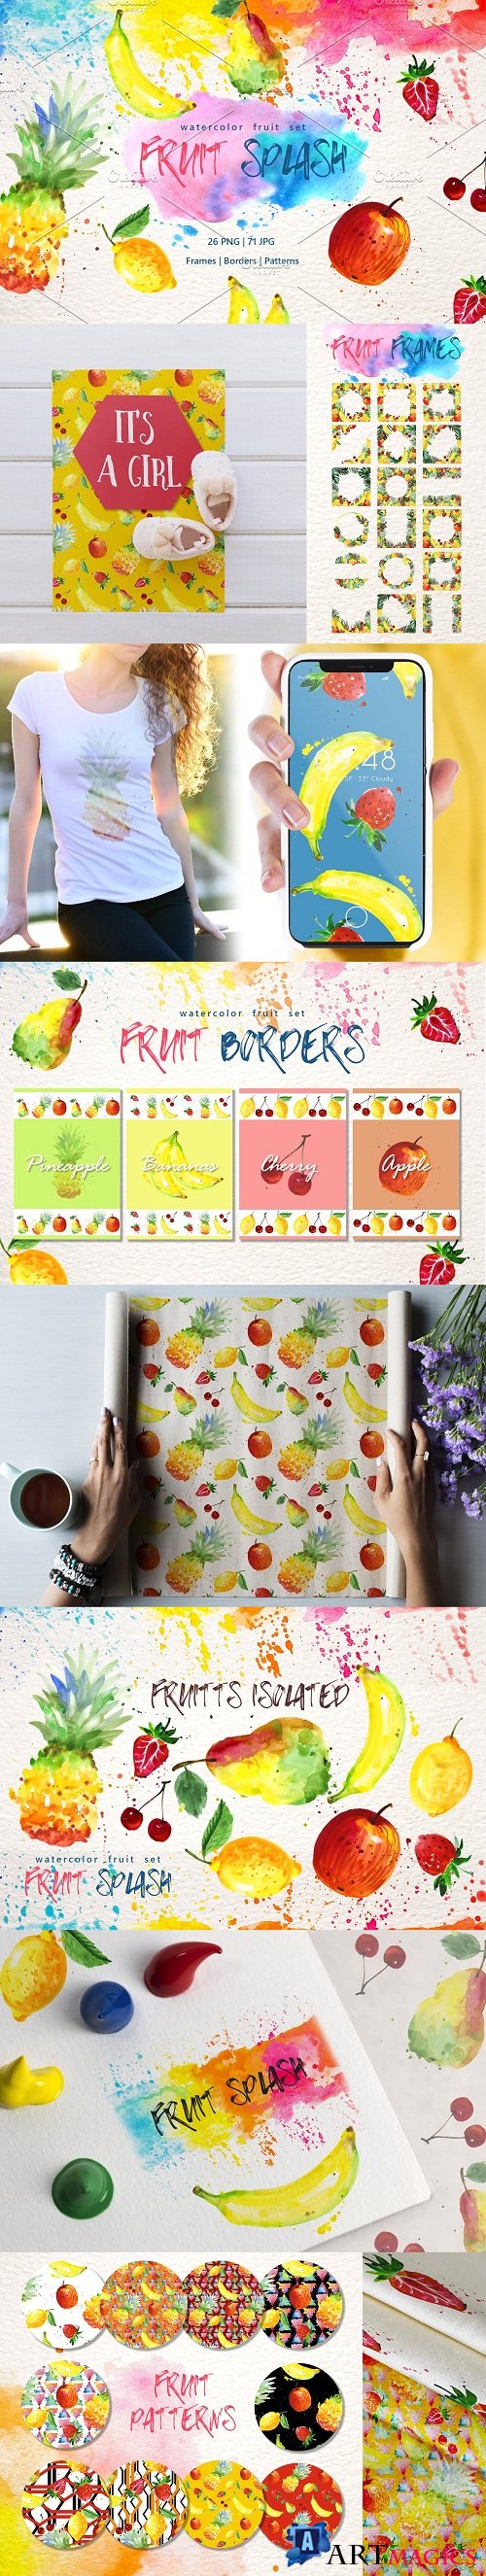 Watercolor fruits PNG set - 3102676